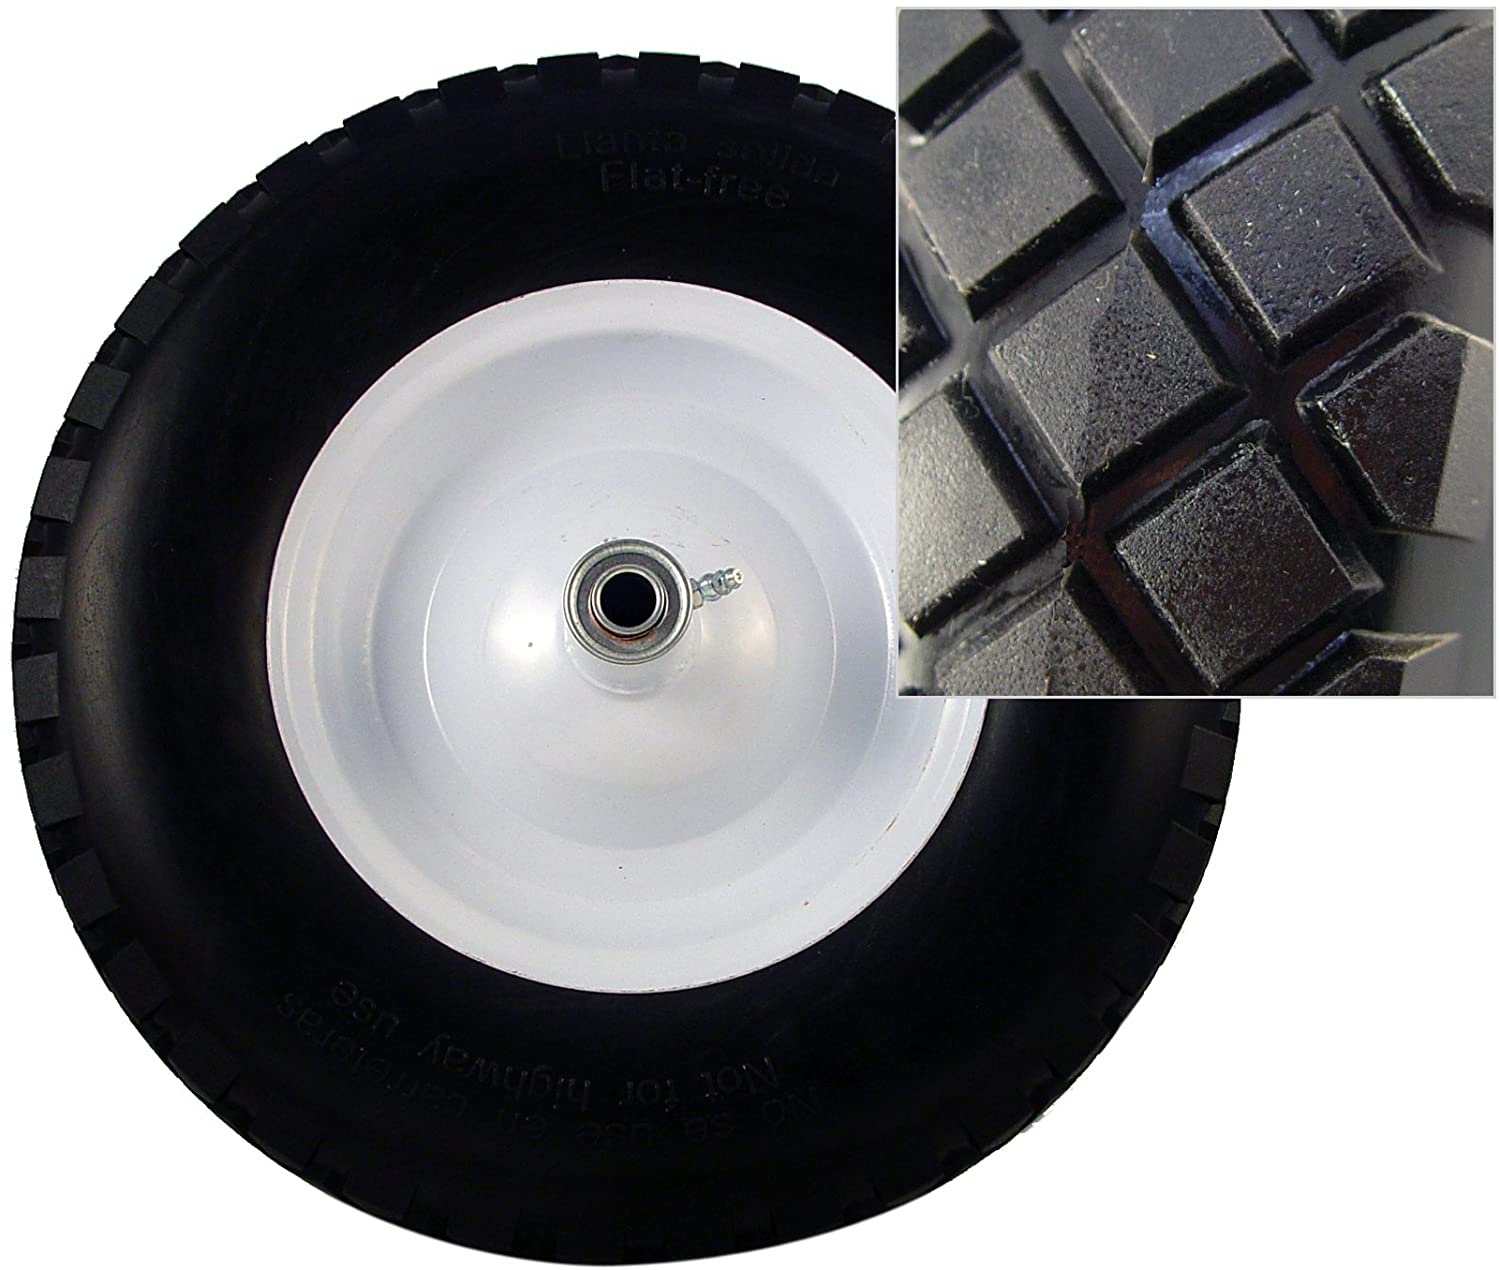 Bon 28-700 Single Flatfree Tire Steel Tray Wheel Barrow With Wood Handle, 6 Cubic Foot - image 2 of 2